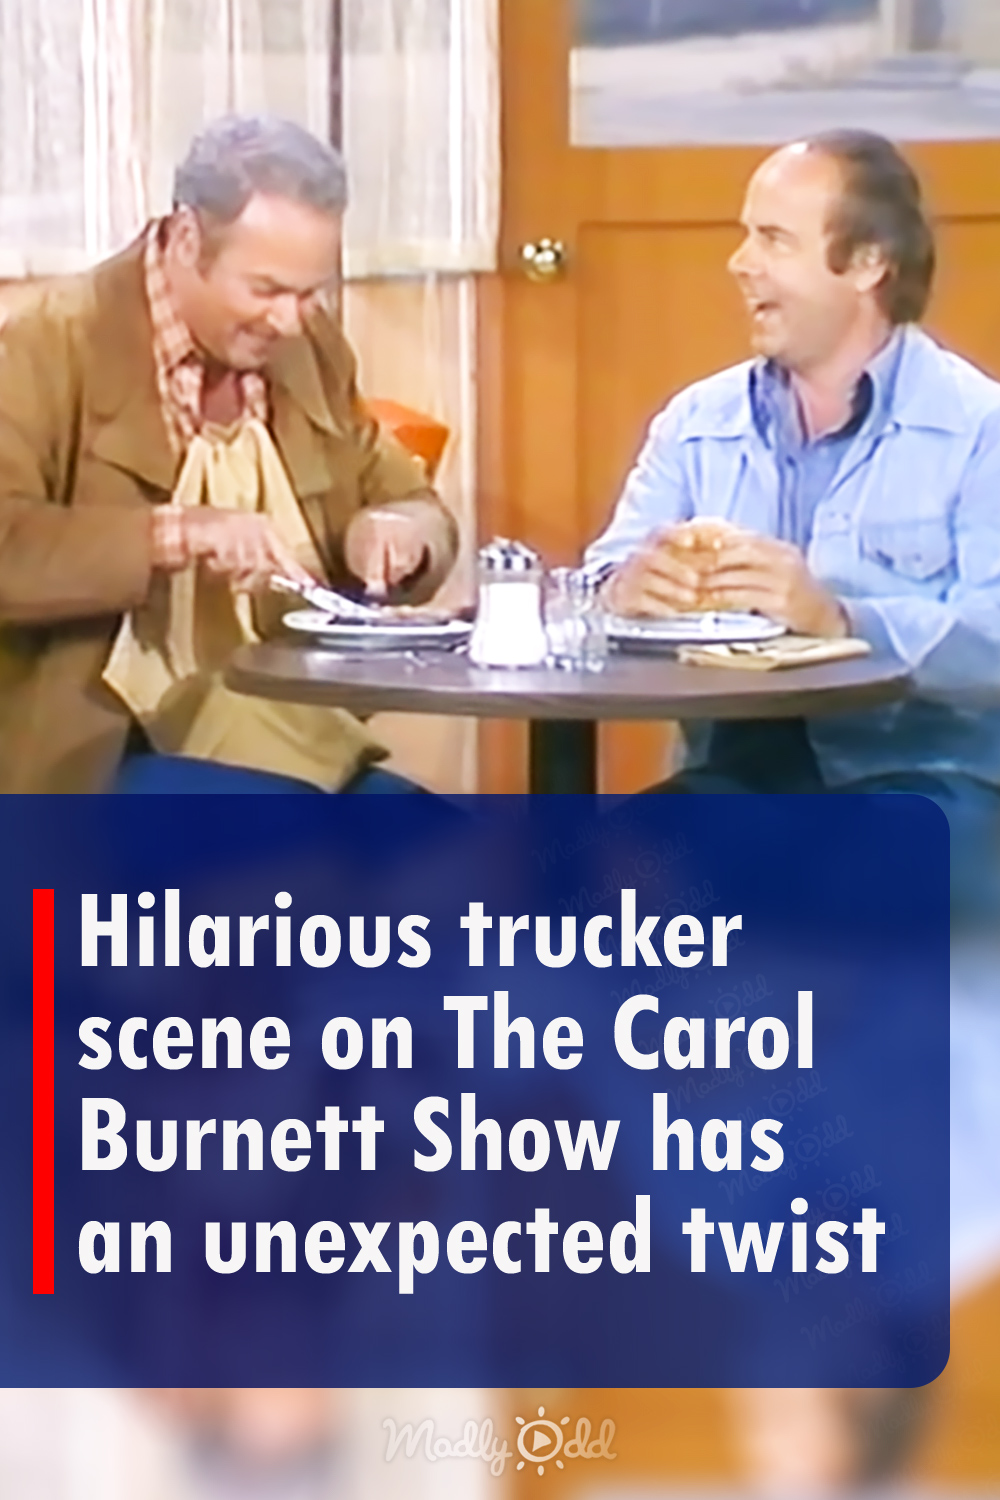 Hilarious trucker scene on The Carol Burnett Show has an unexpected twist